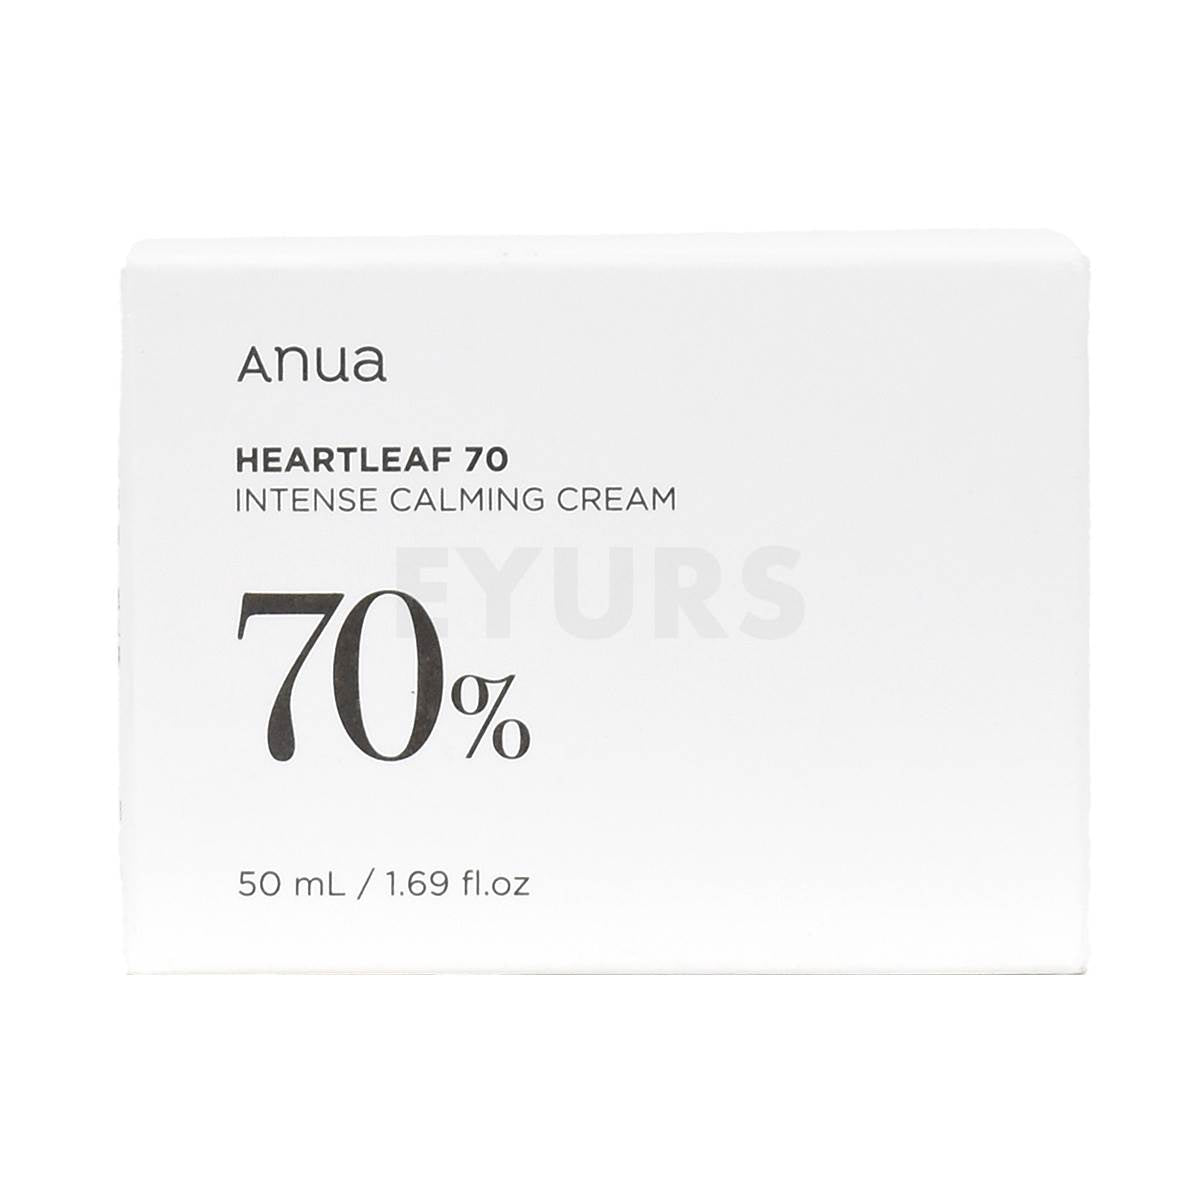 anua heartleaf 70 intense calming cream 50ml front side packaging